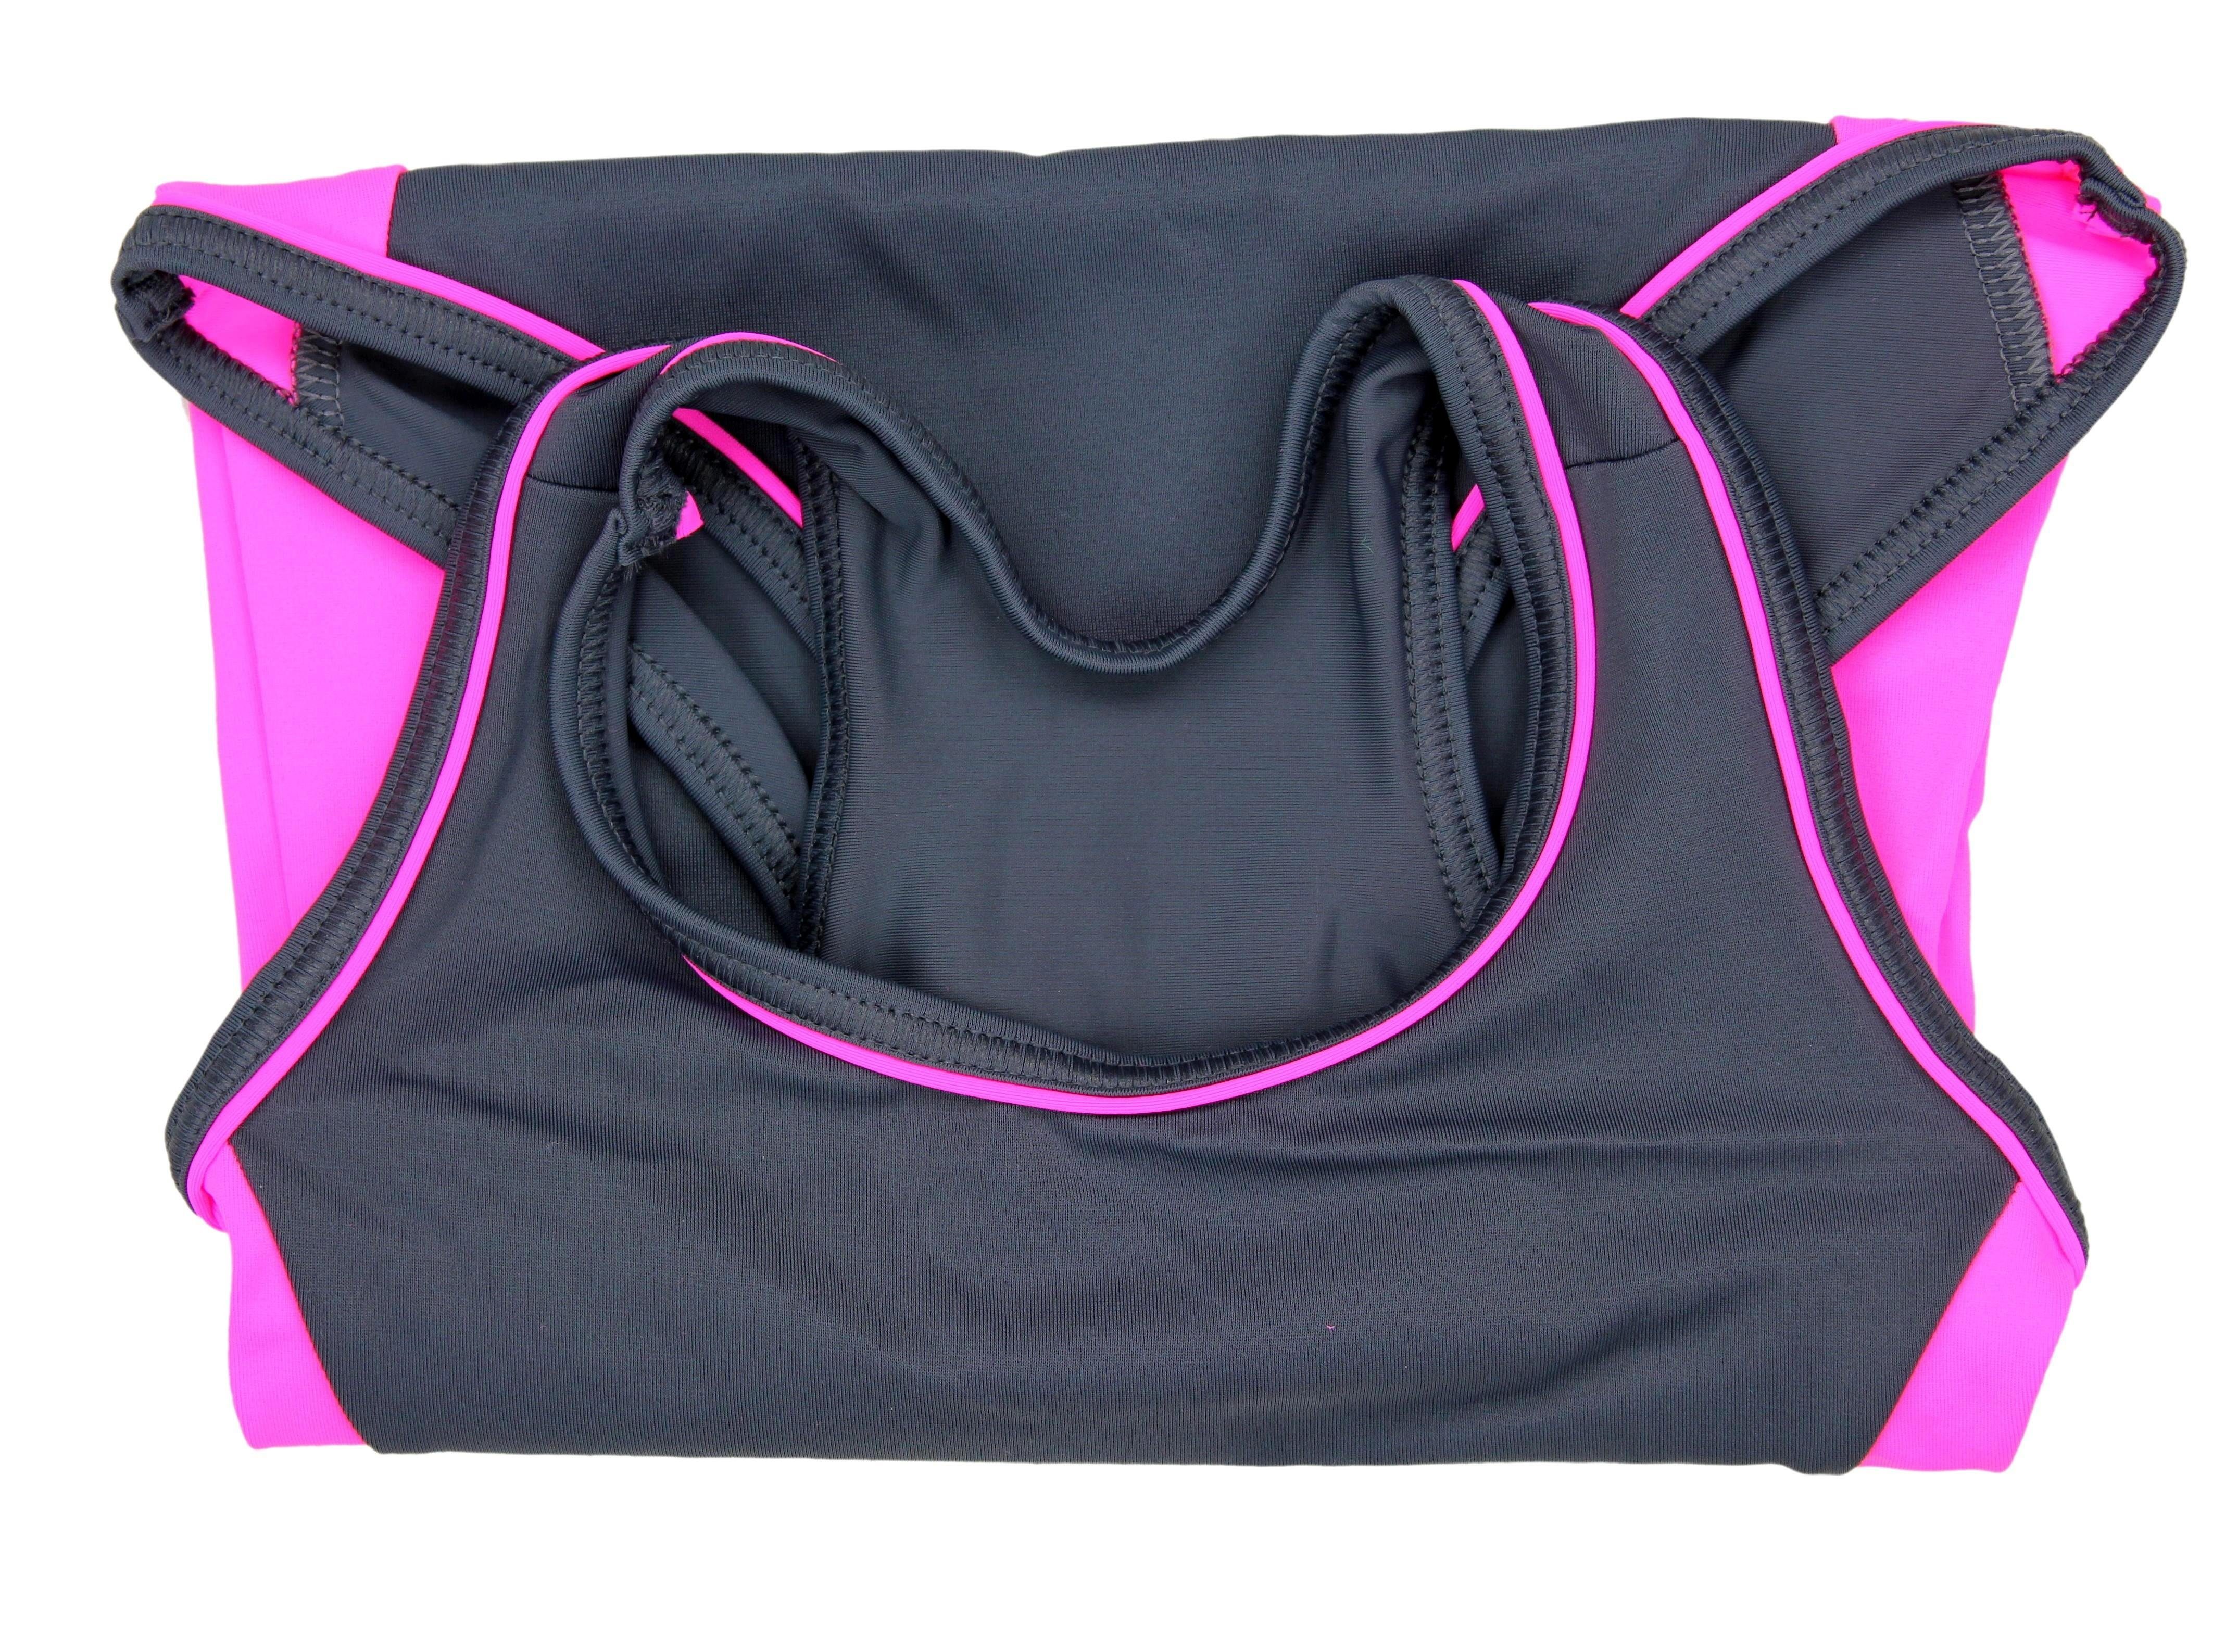 Aquarti Schwimmanzug / Pink Aquarti Badeanzug Racerback Grau mit Mädchen Schwimmanzug Sportlich